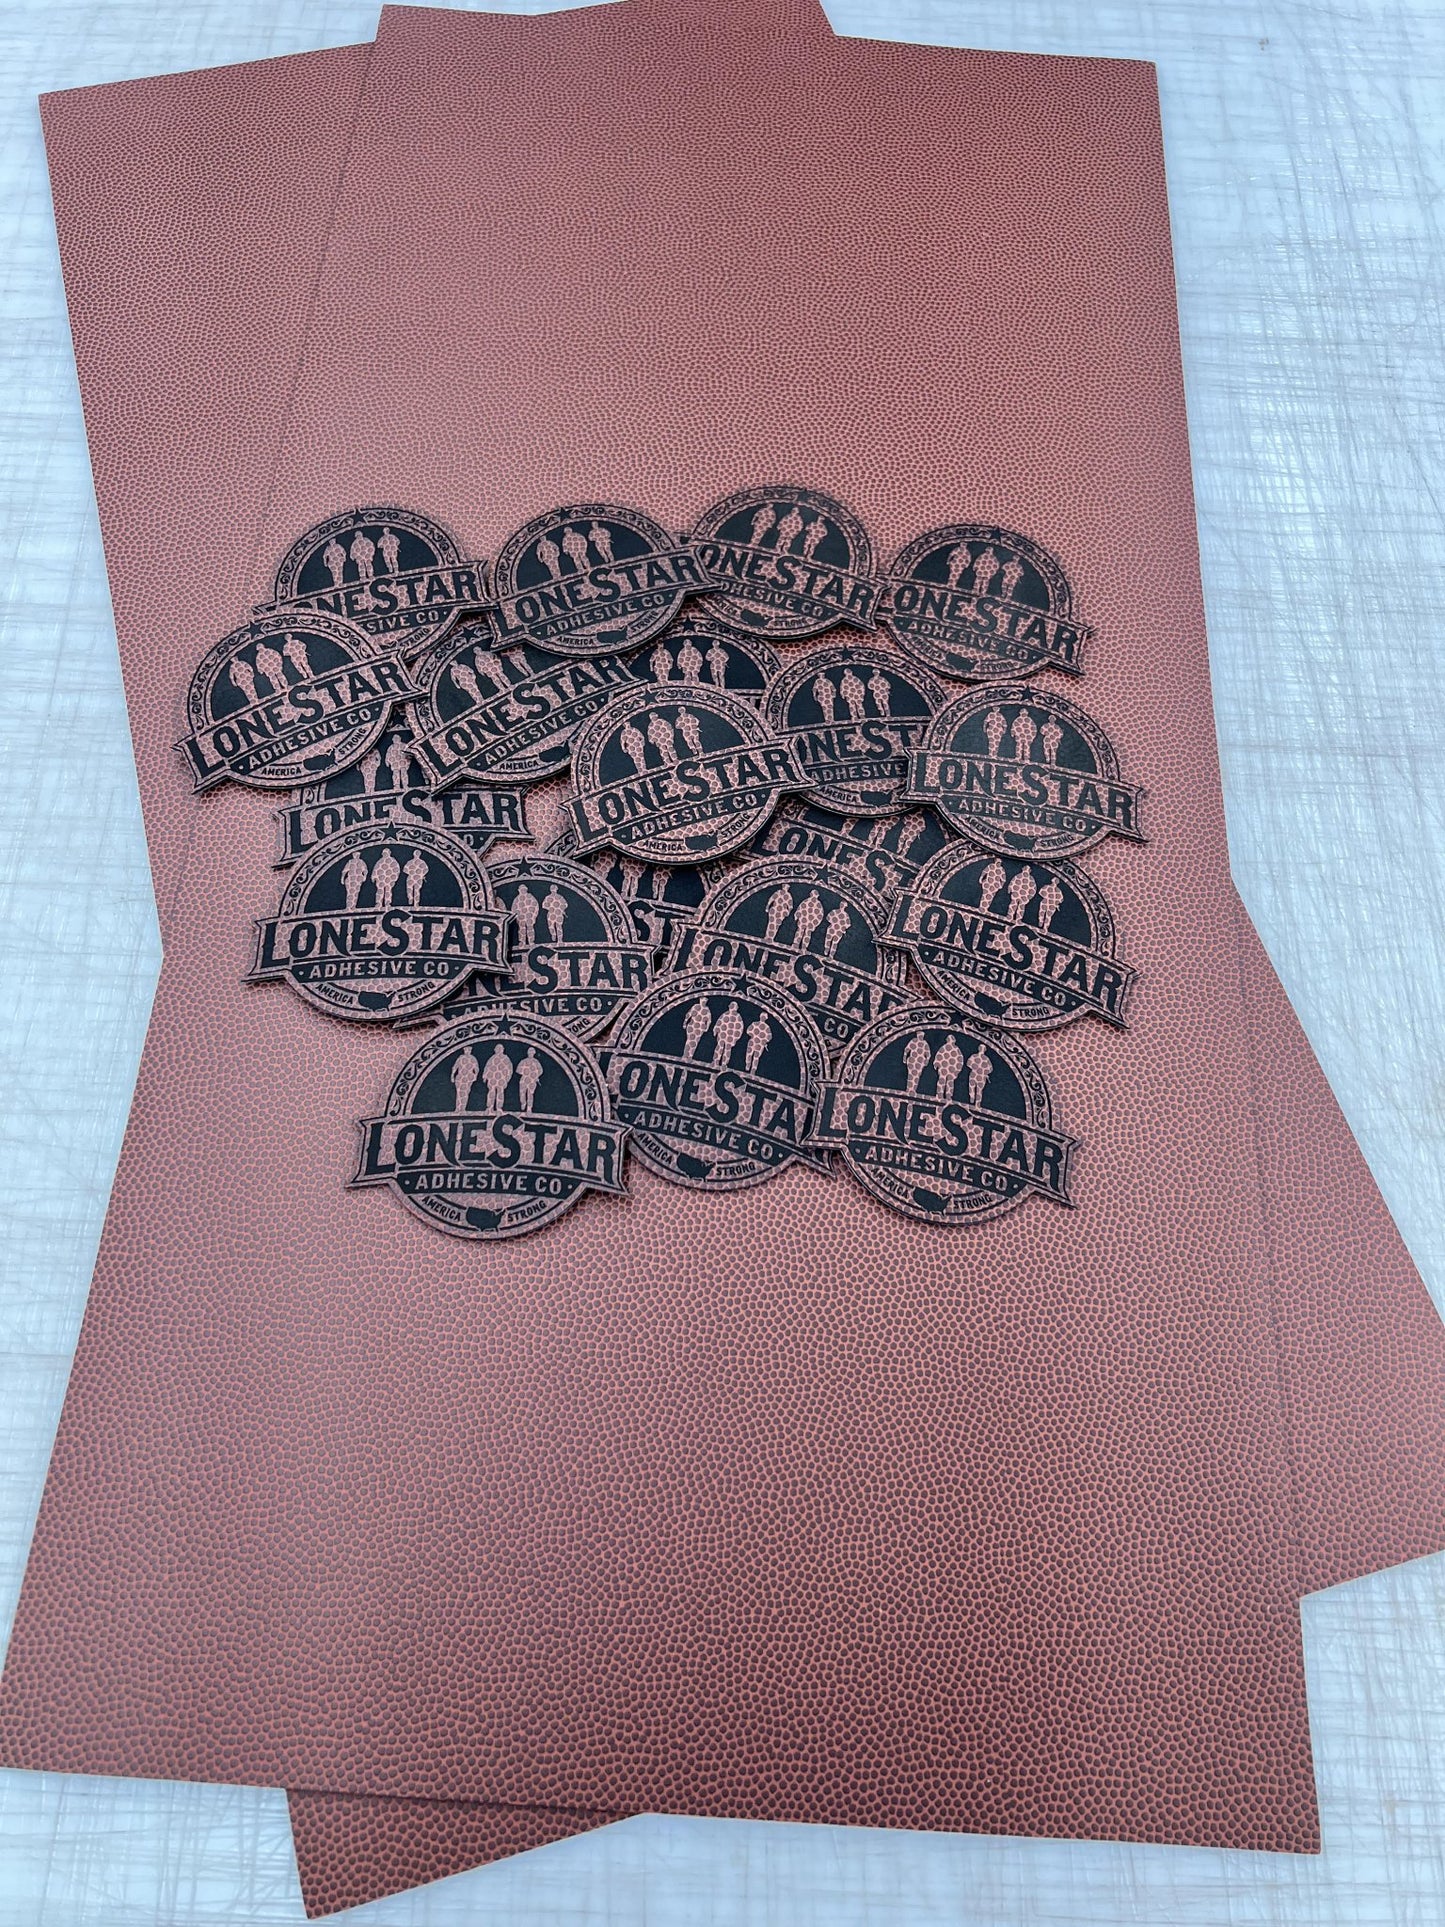 PREMIUM Football texture/black Durra-Bull Leatherette Sheets (12x24) - #LoneStar Adhesive#